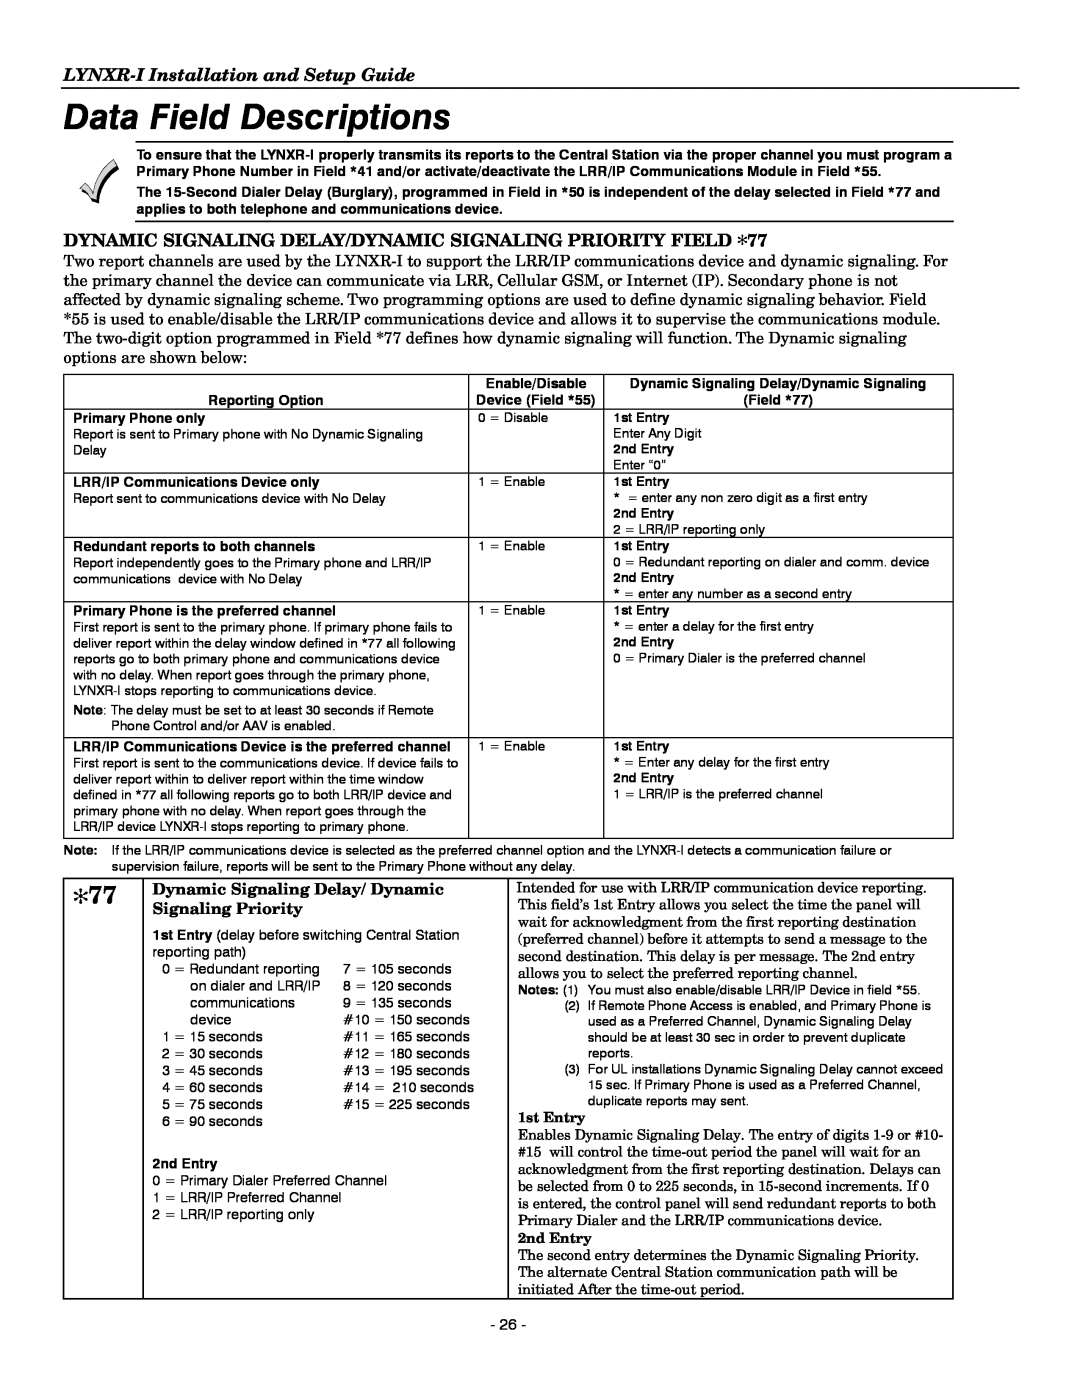 Honeywell K14114 3/06 Rev.B Data Field Descriptions, LYNXR-IInstallation and Setup Guide, Dynamic Signaling Delay/ Dynamic 